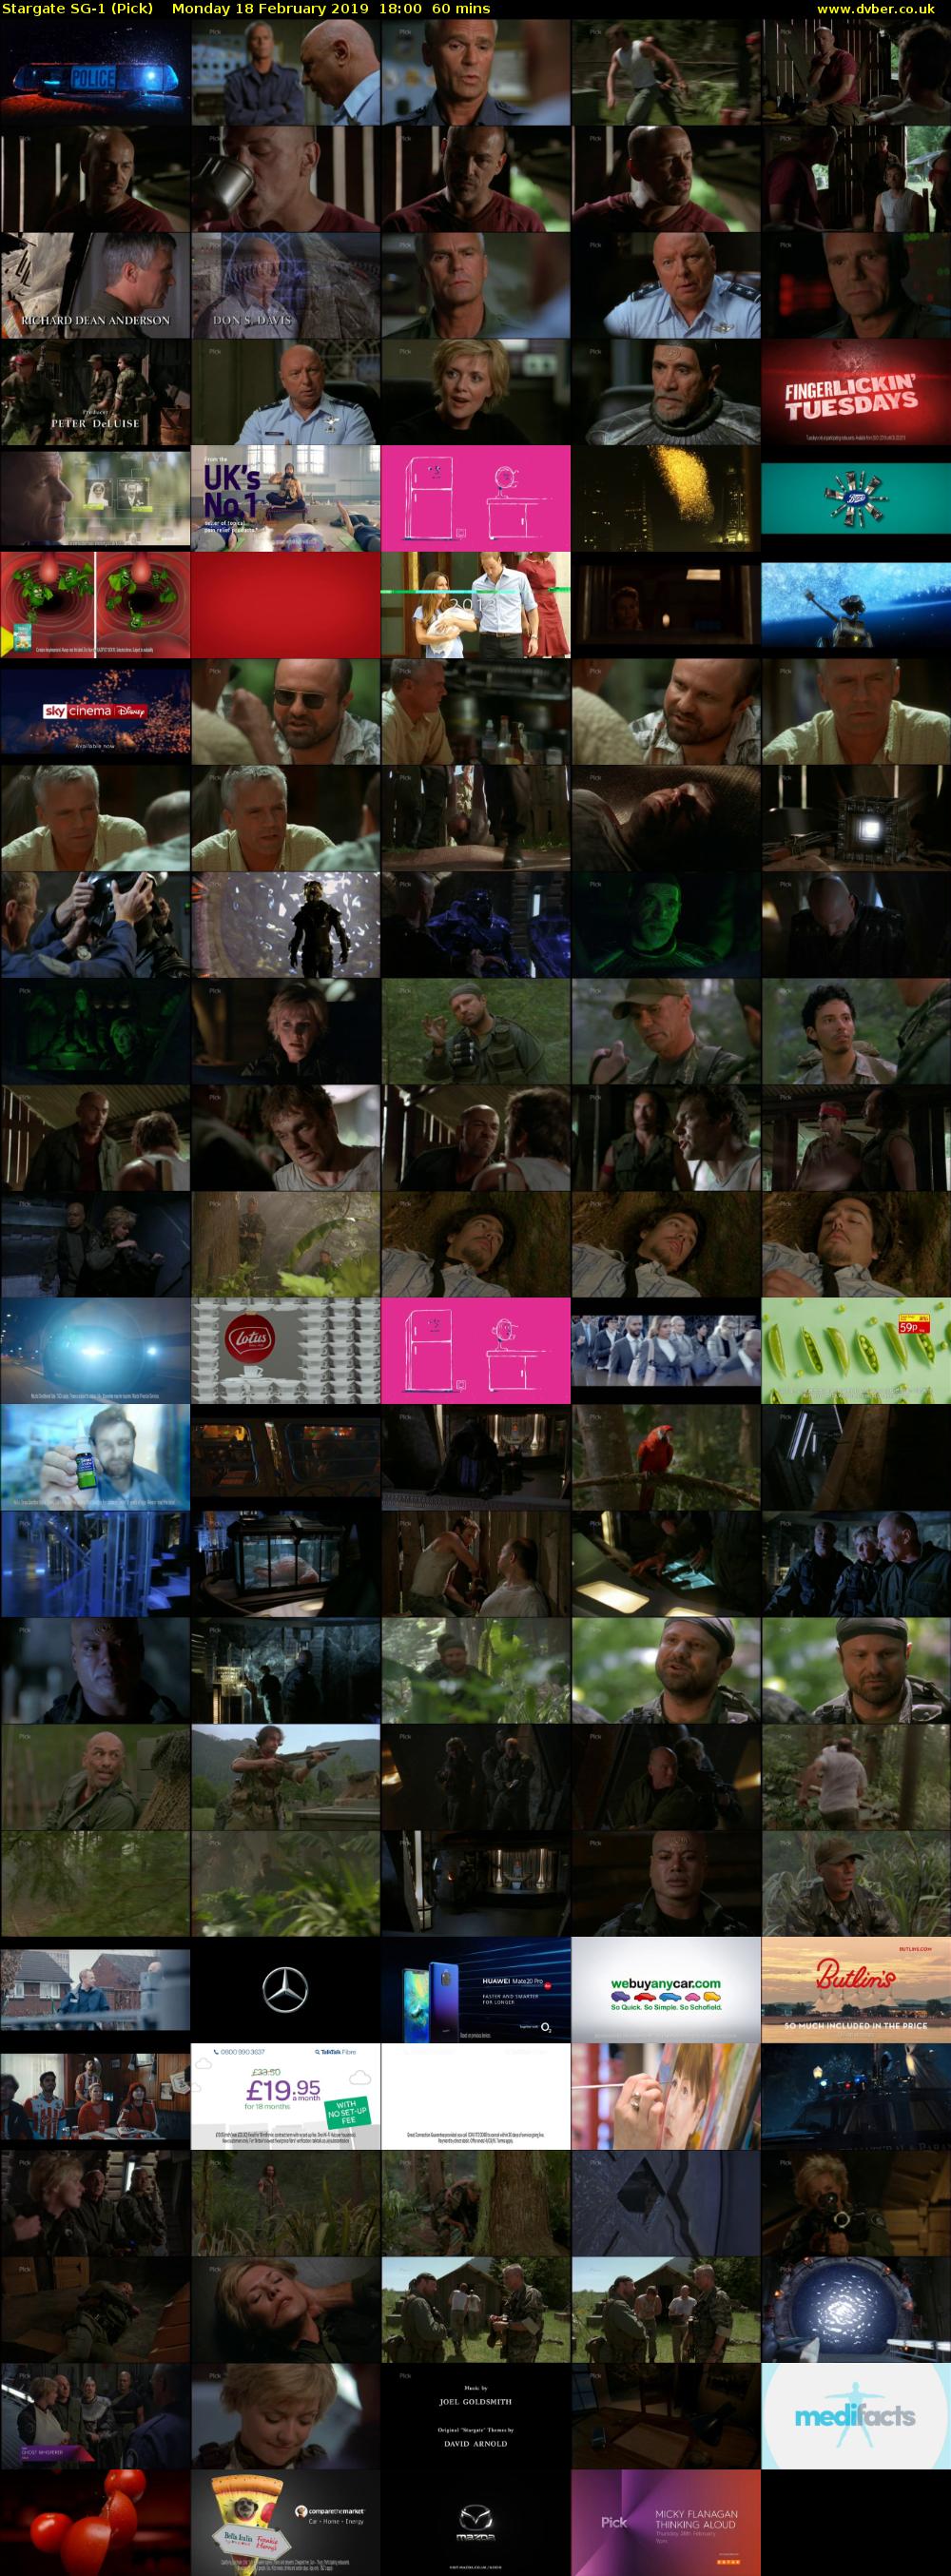 Stargate SG-1 (Pick) Monday 18 February 2019 18:00 - 19:00